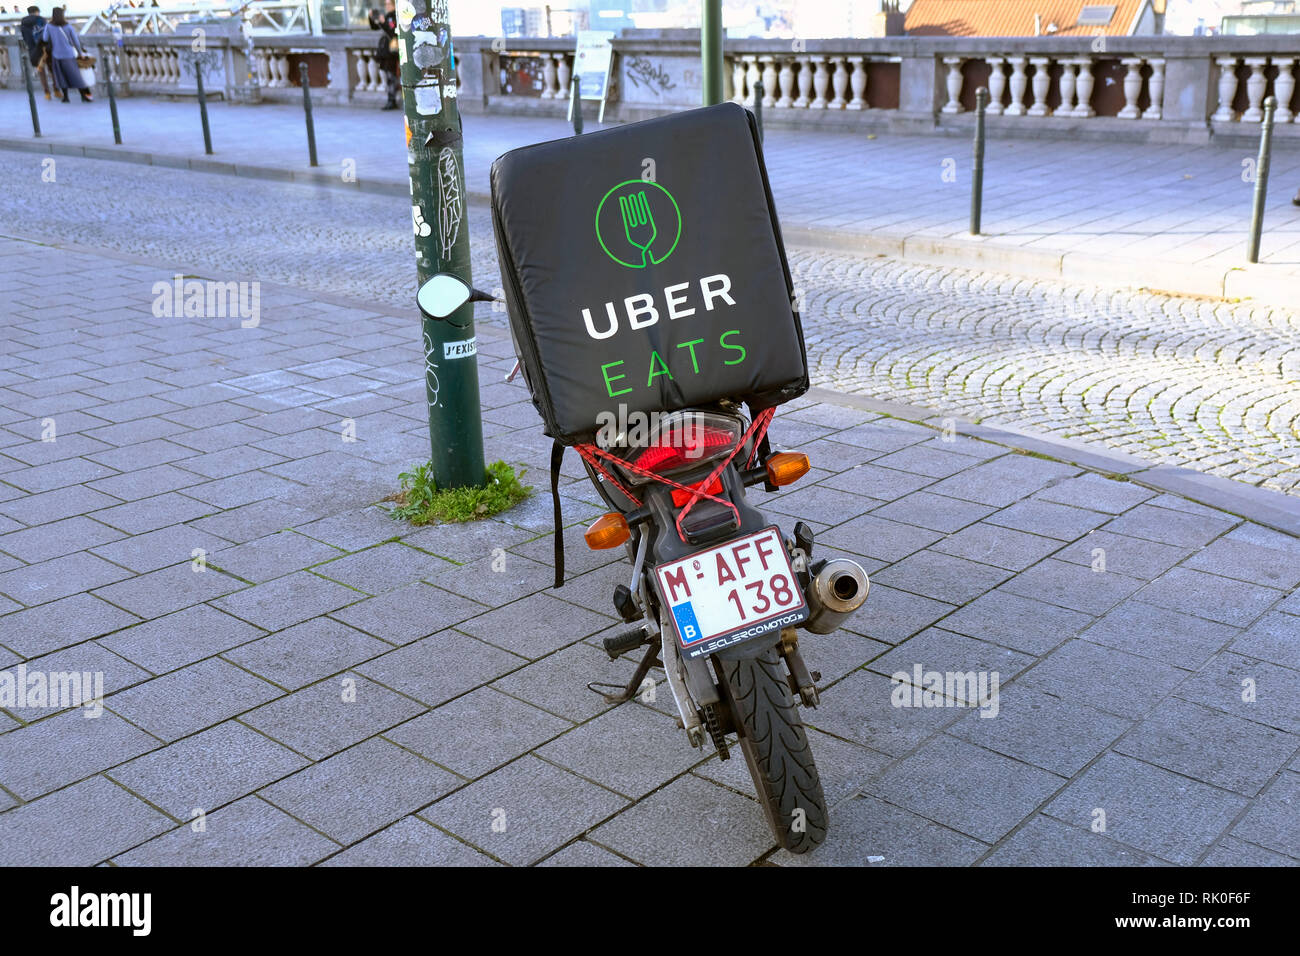 14.11.2018, Bruessel, Belgien - Motorrad eines Lieferanten, der fuer Uber mangia Speisen ausliefert in Bruessel Foto Stock